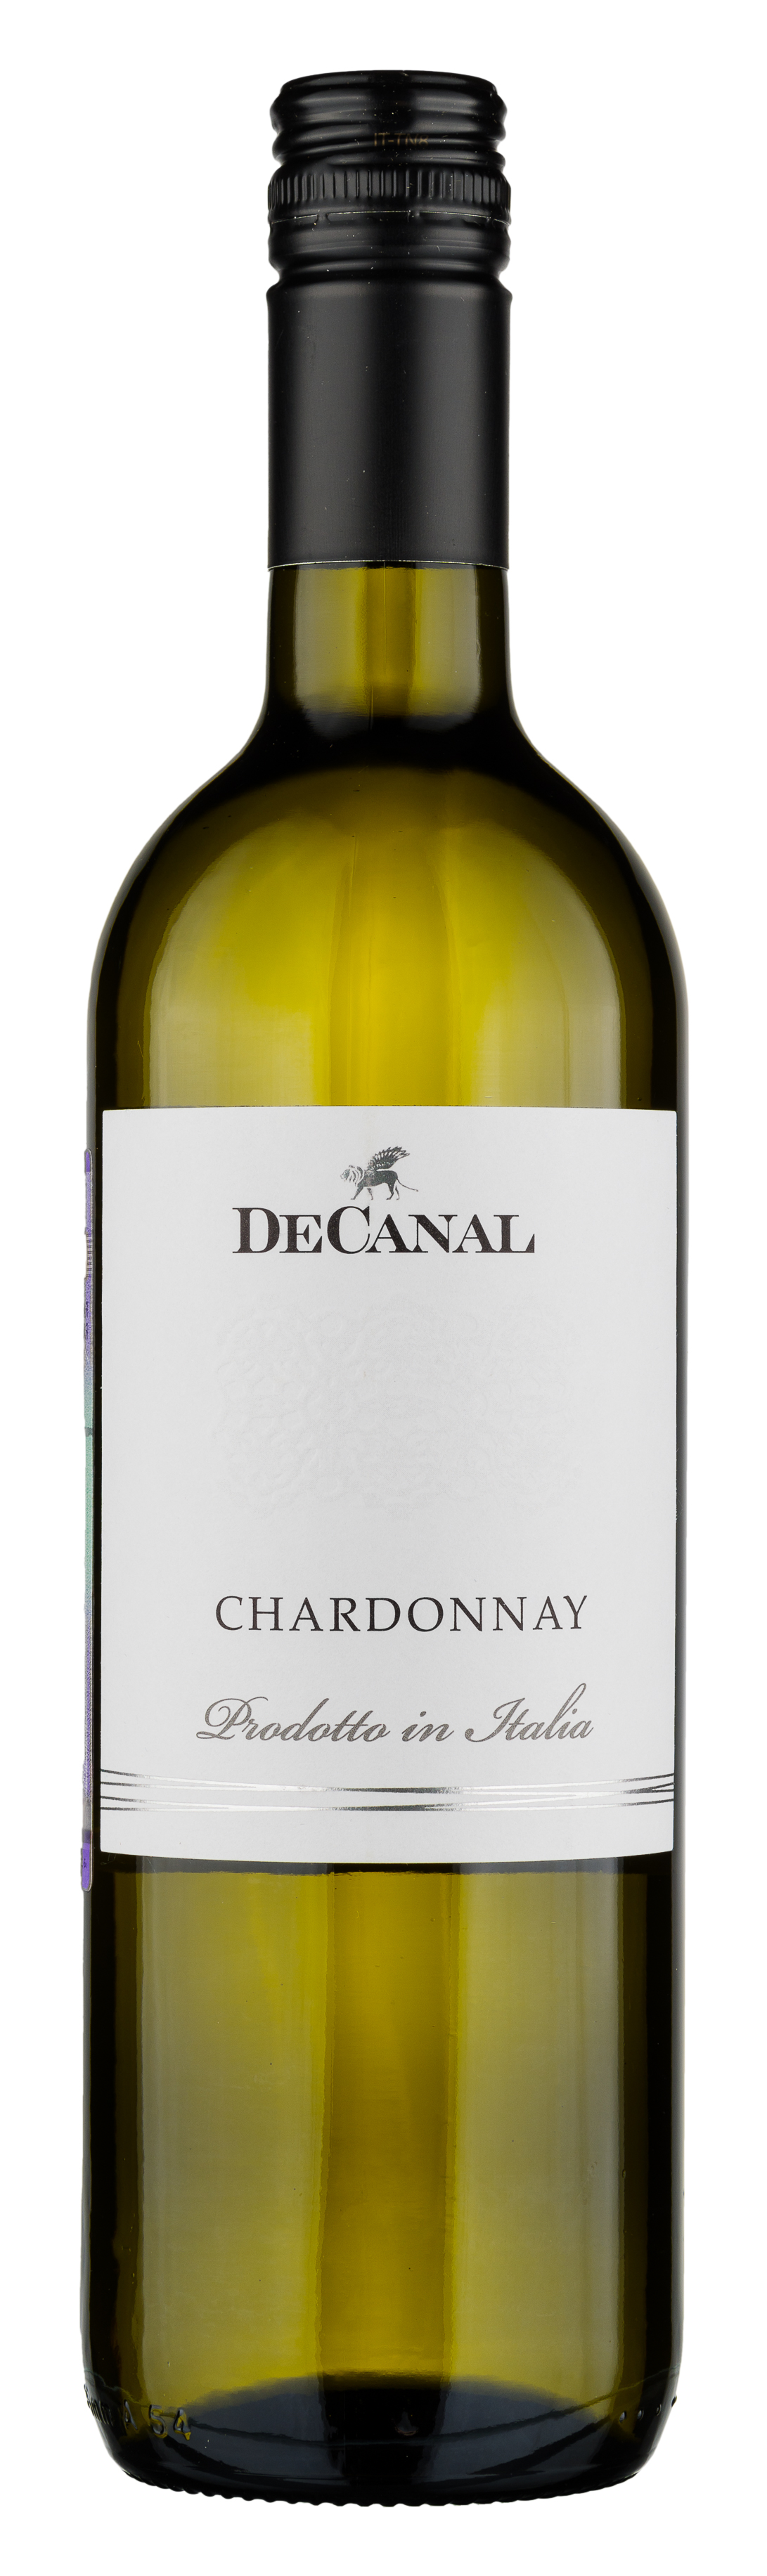 Wine Decanal Chardonnay